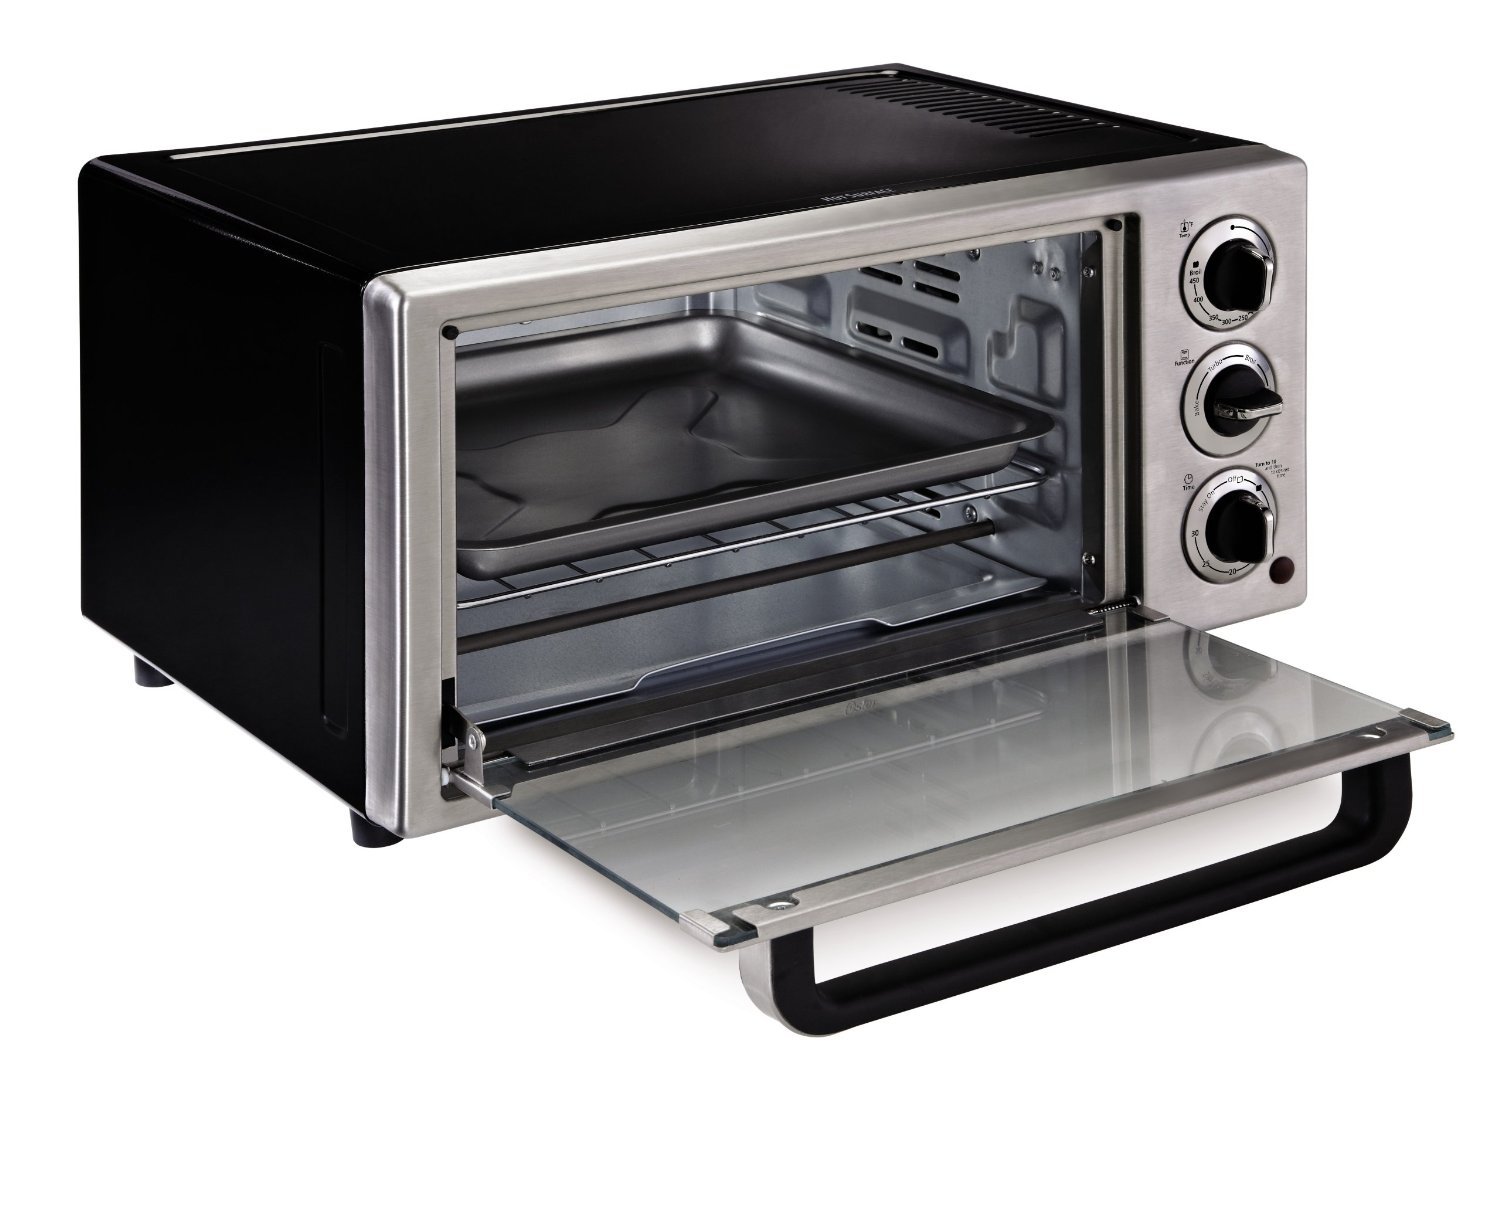 Oster Tssttvf815 6 Slice Toaster Oven Bakingreview Com